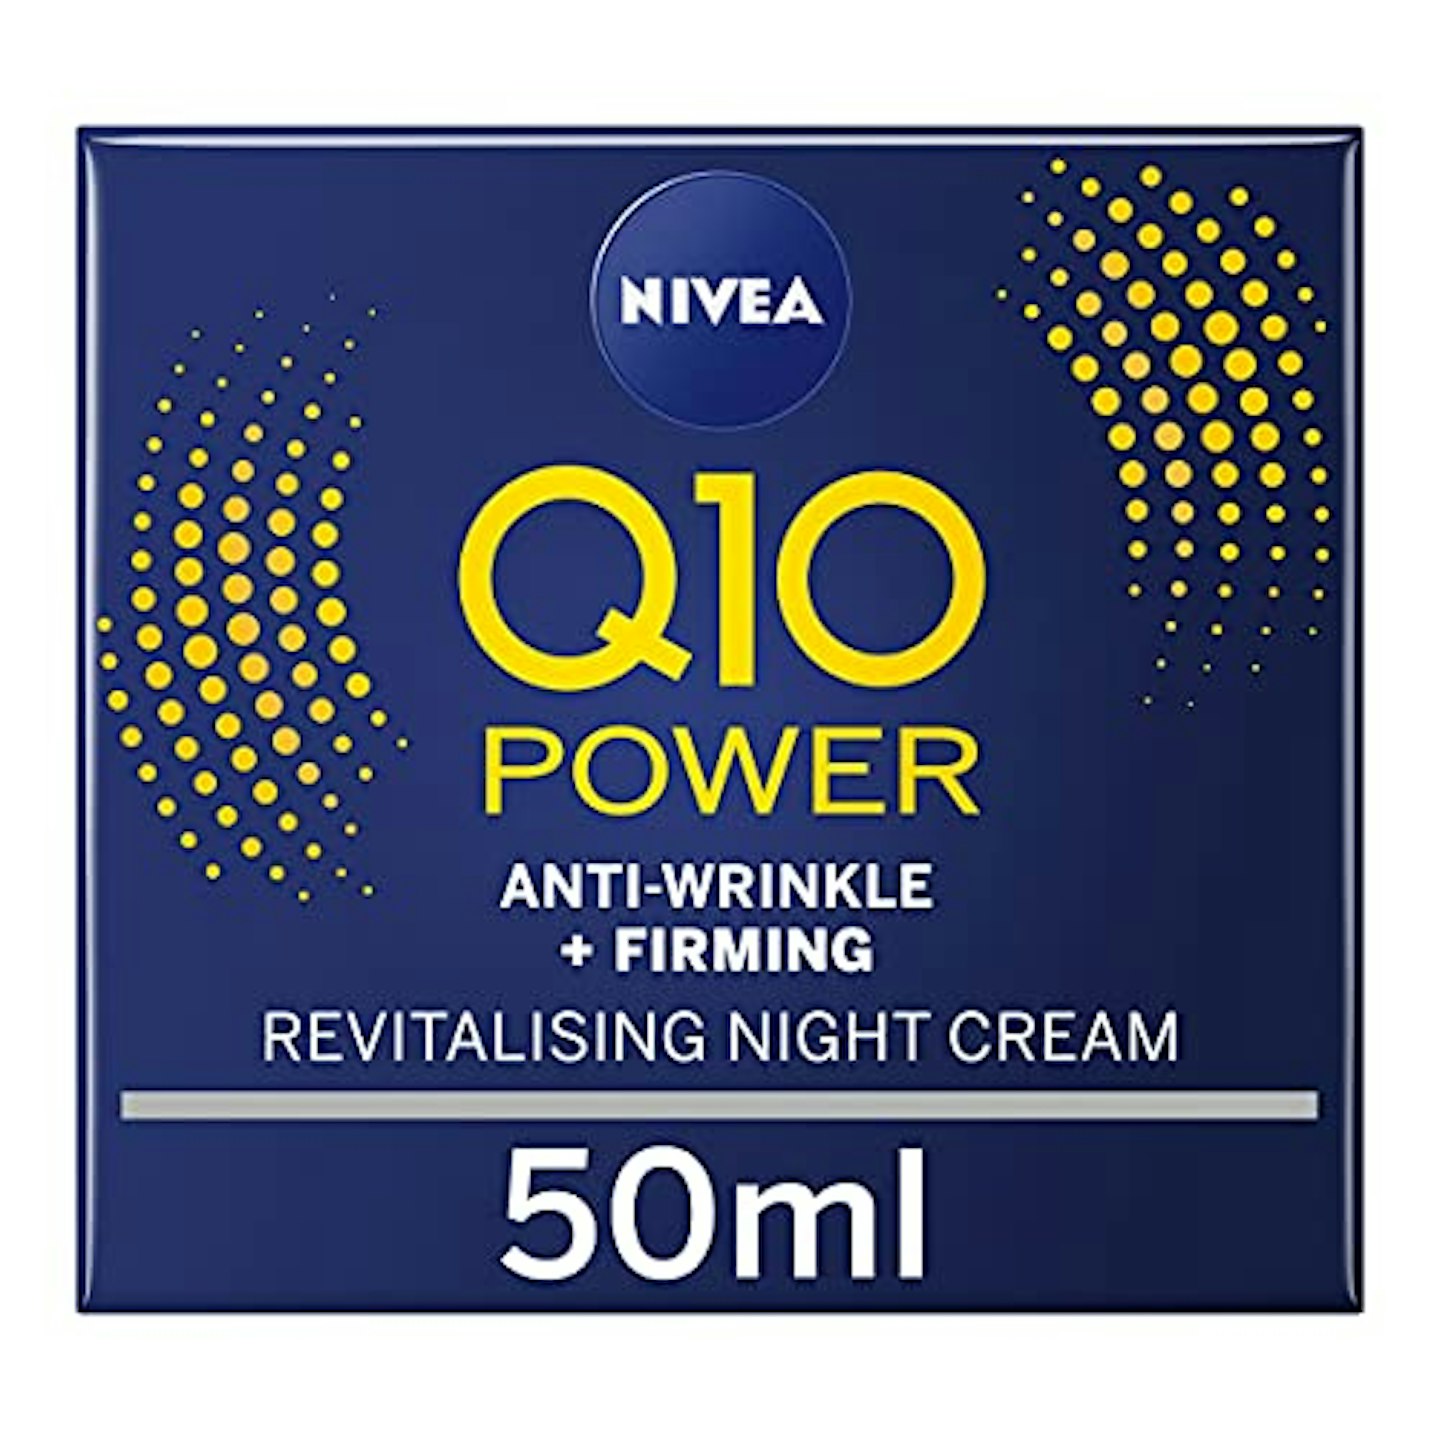 NIVEA Q10 Power Anti-Wrinkle + Firming Night Cream